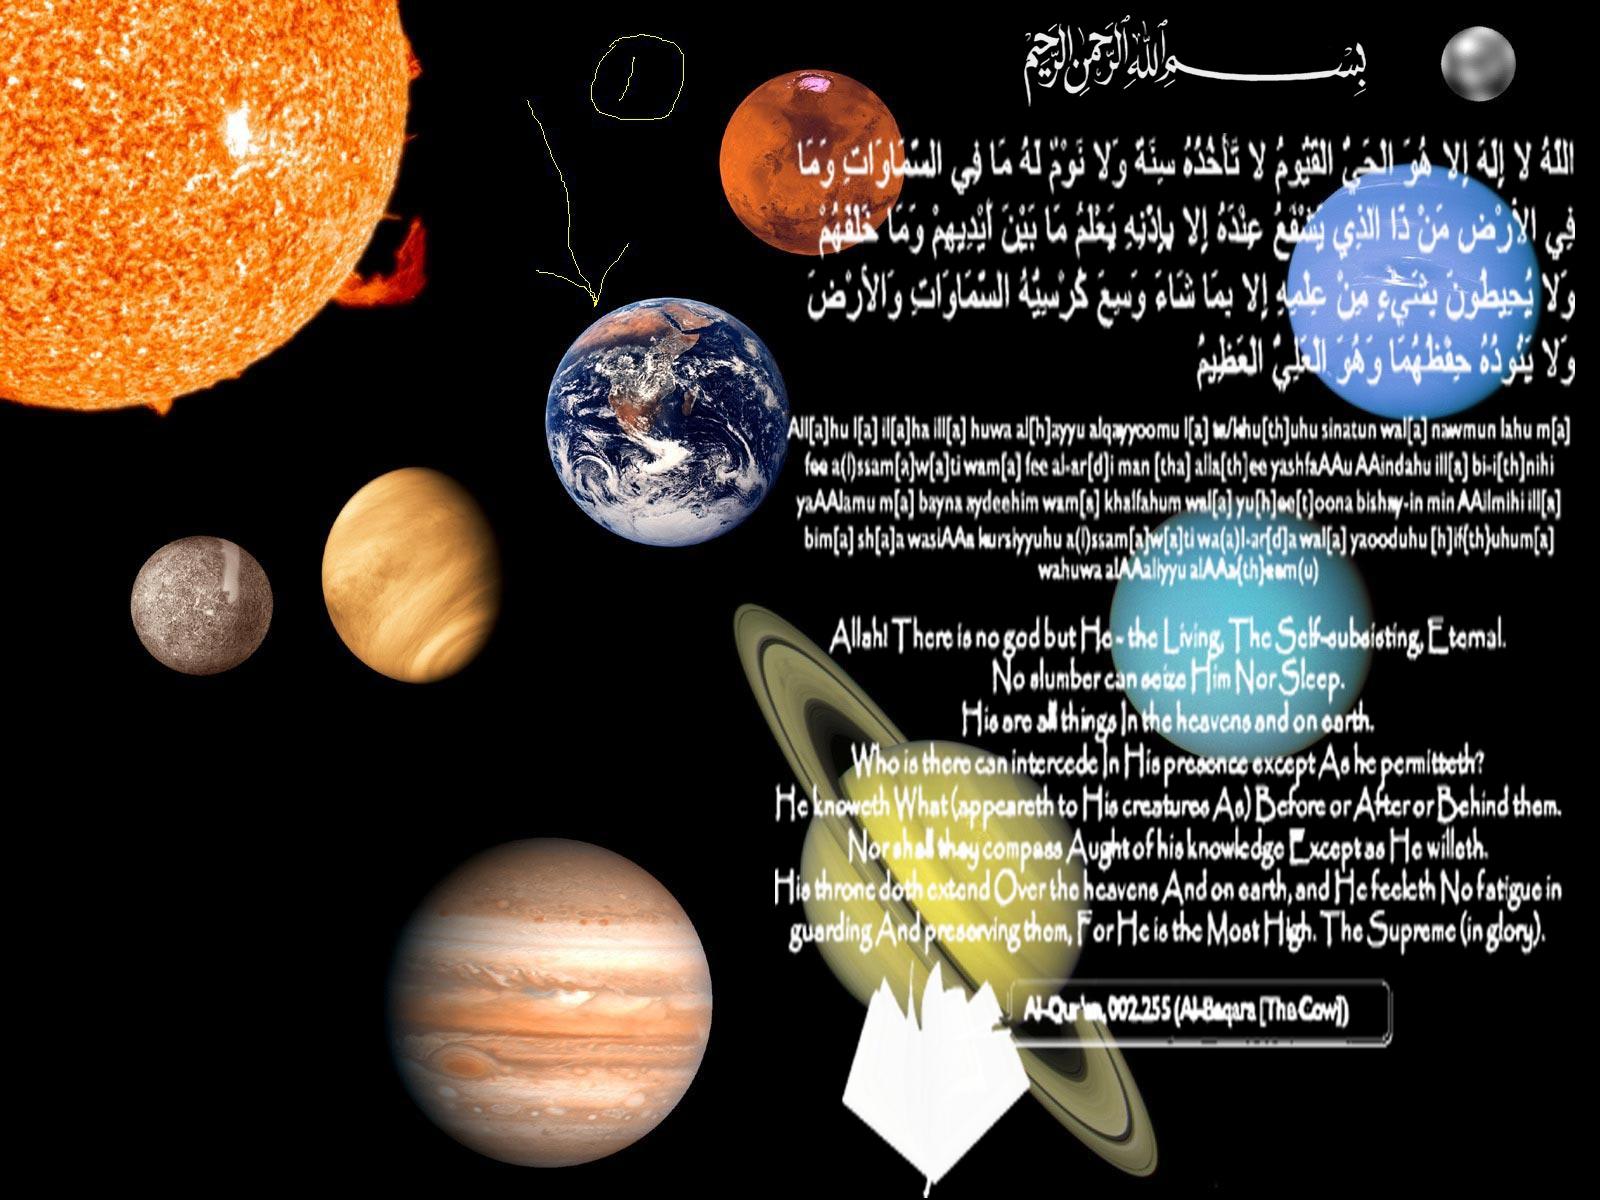 ayatul kursi壁紙,惑星,天文学,理科,天体,スペース